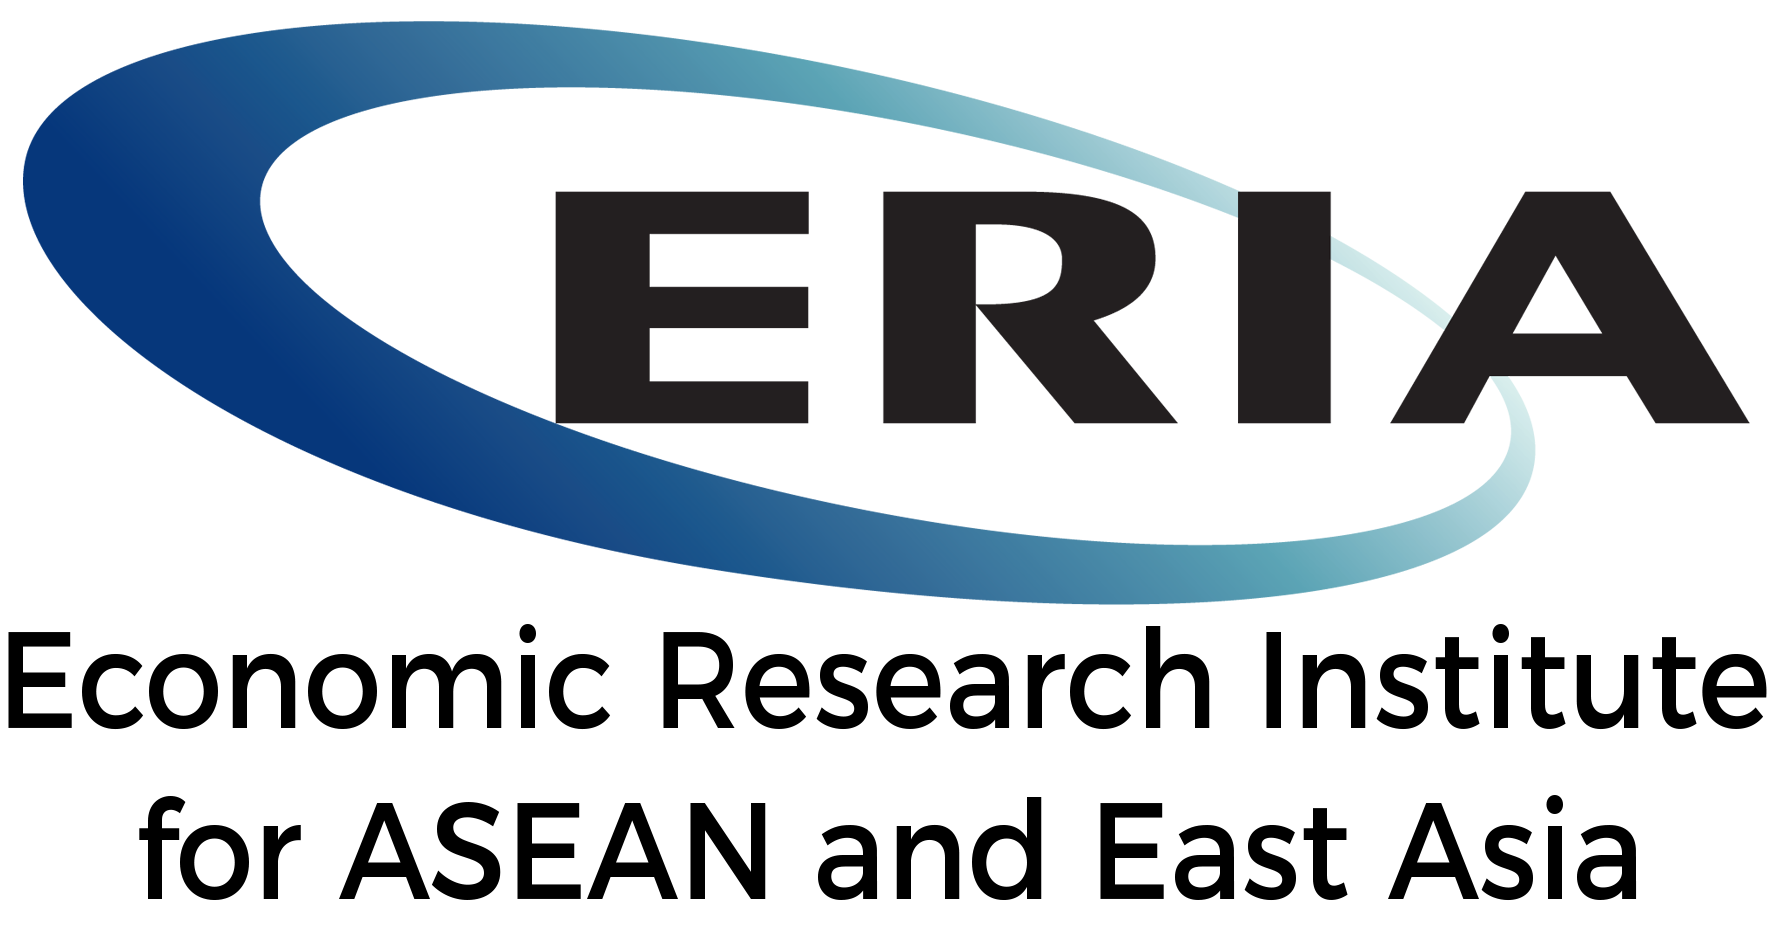 Logo of ERIA (Economic Research Institute for ASEAN and East Asia)